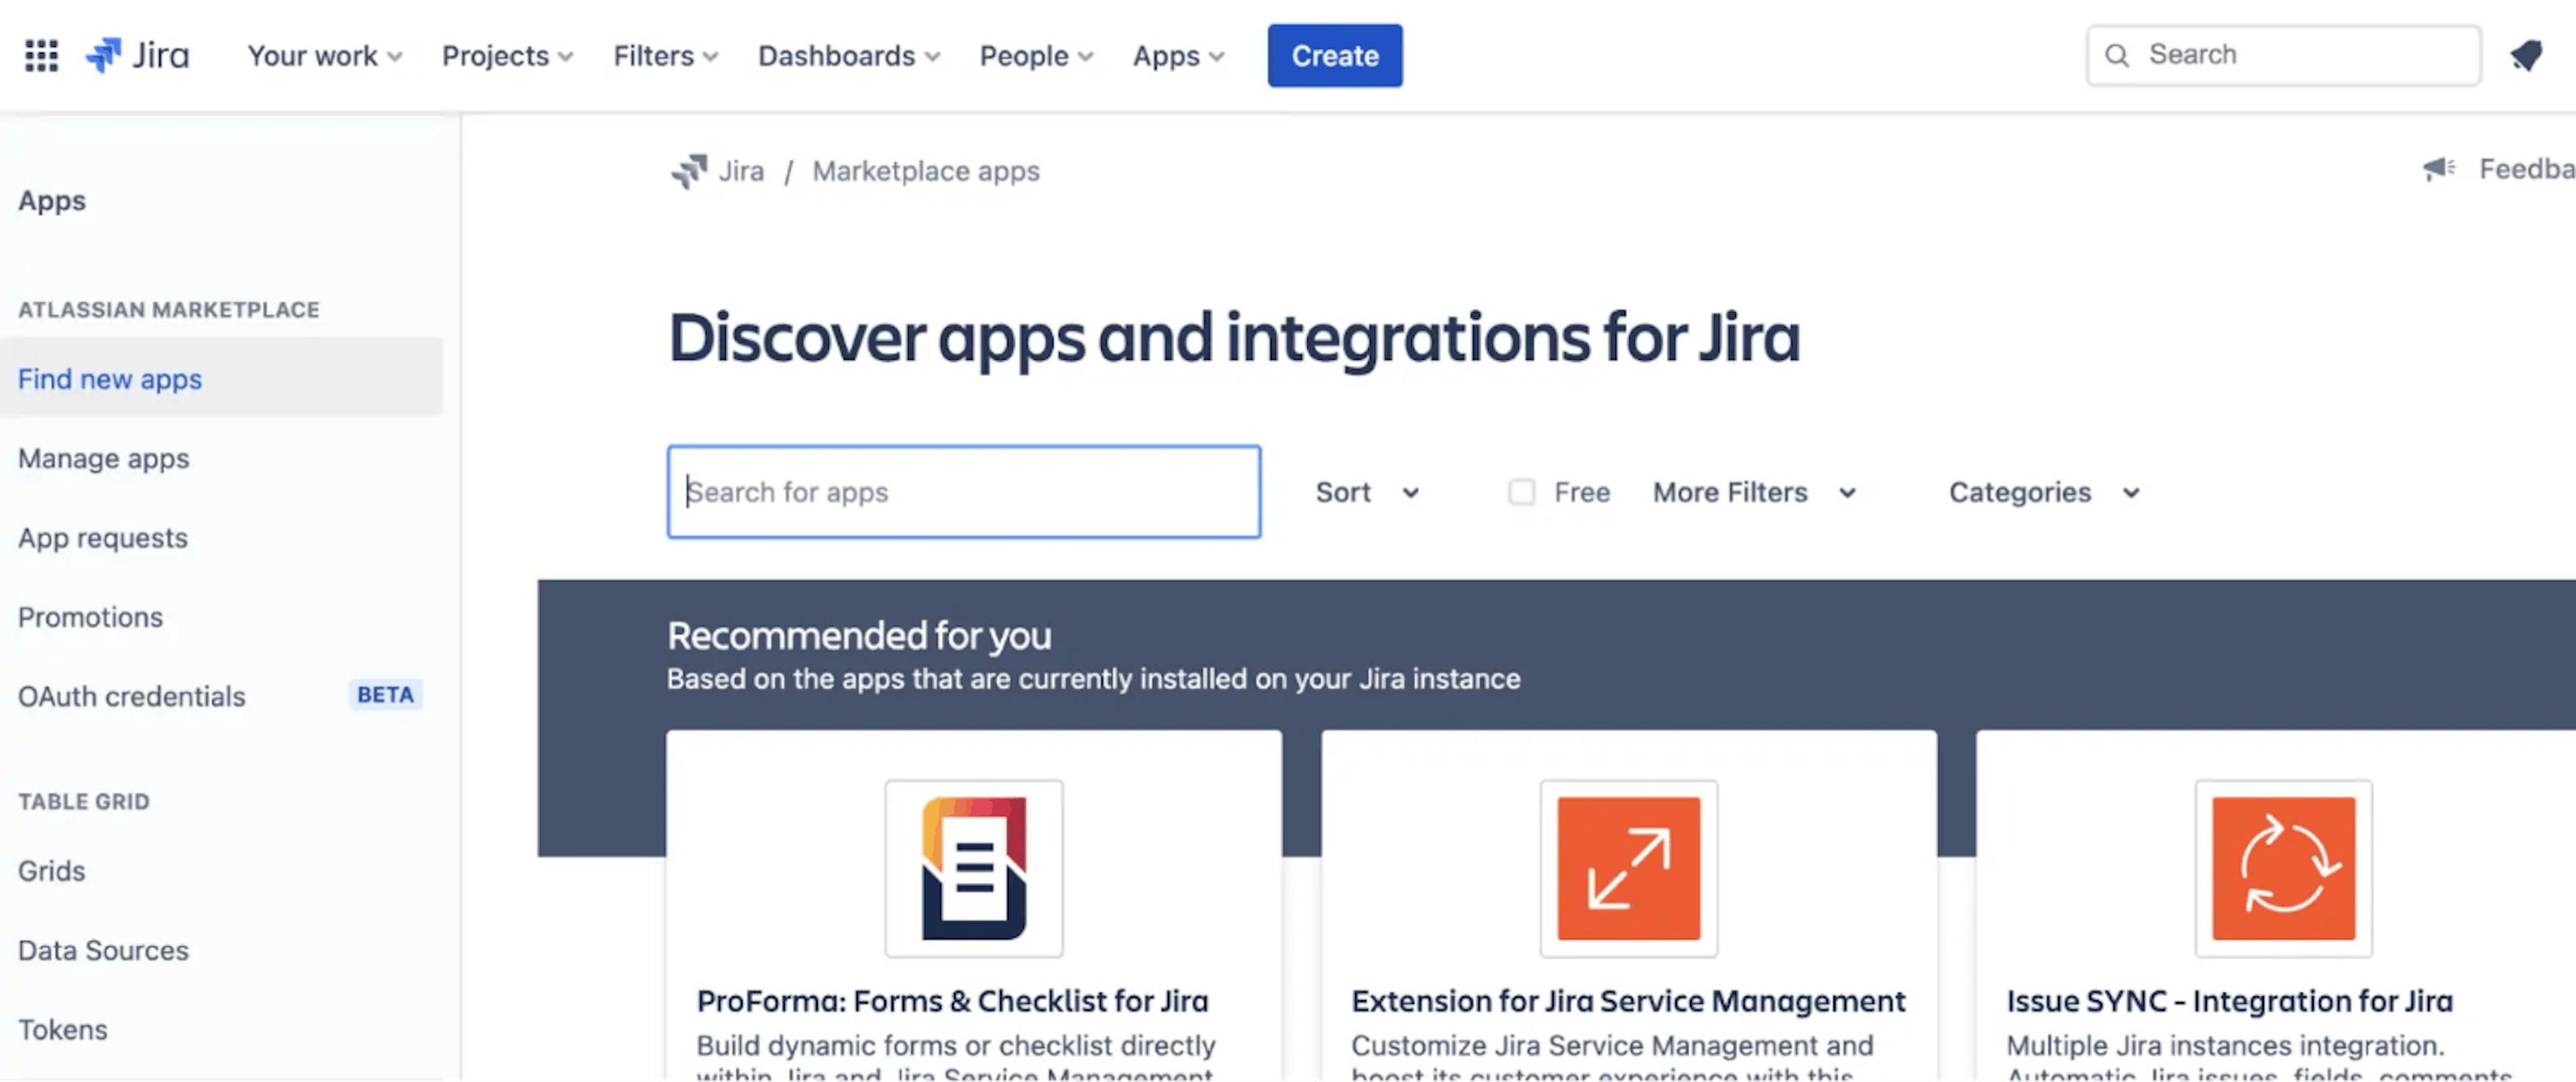 Exalate for Jira integrations 